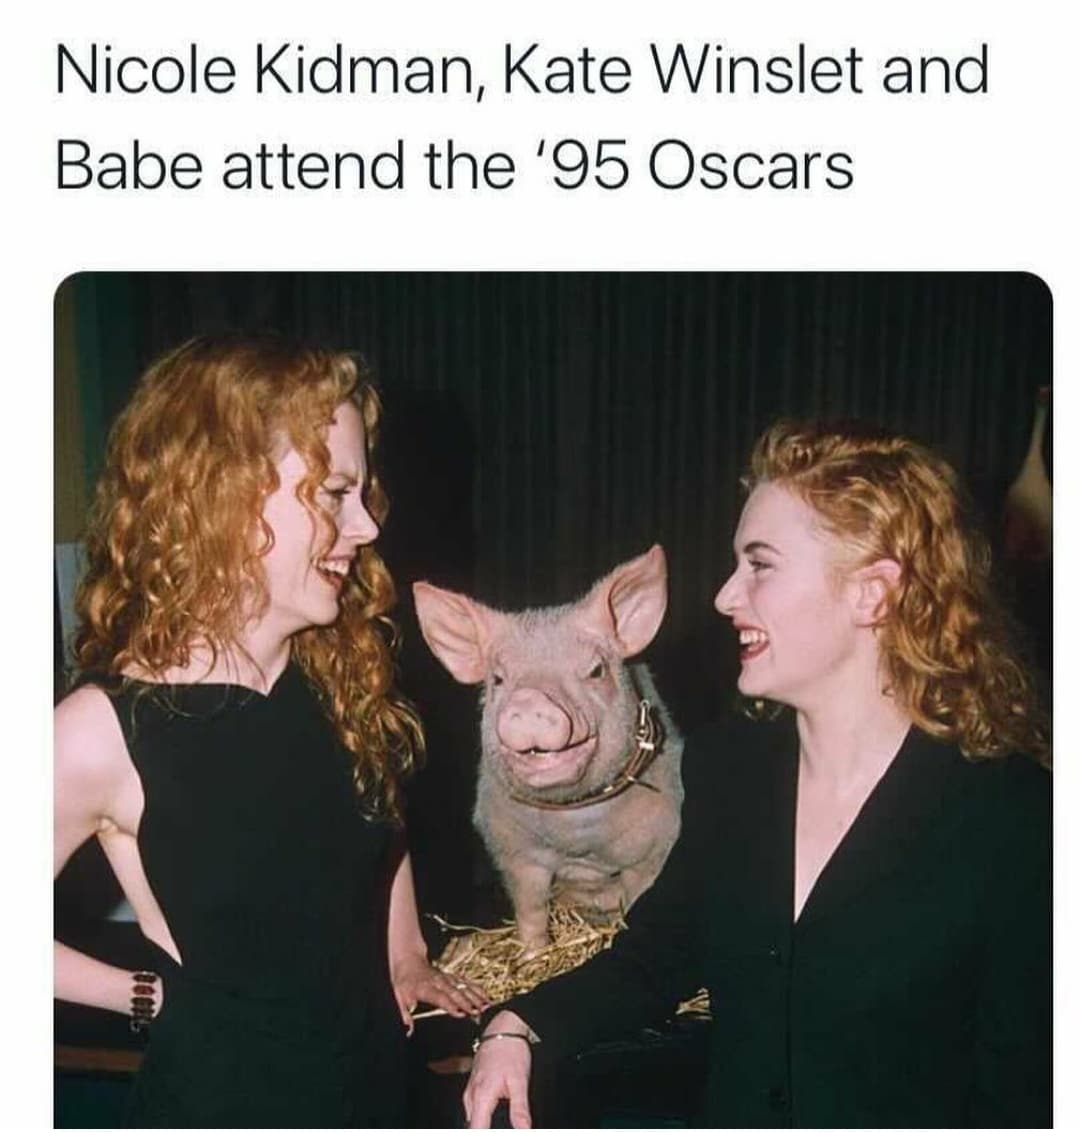 monday morning randomness - photo caption - Nicole Kidman, Kate Winslet and Babe attend the '95 Oscars Uggel